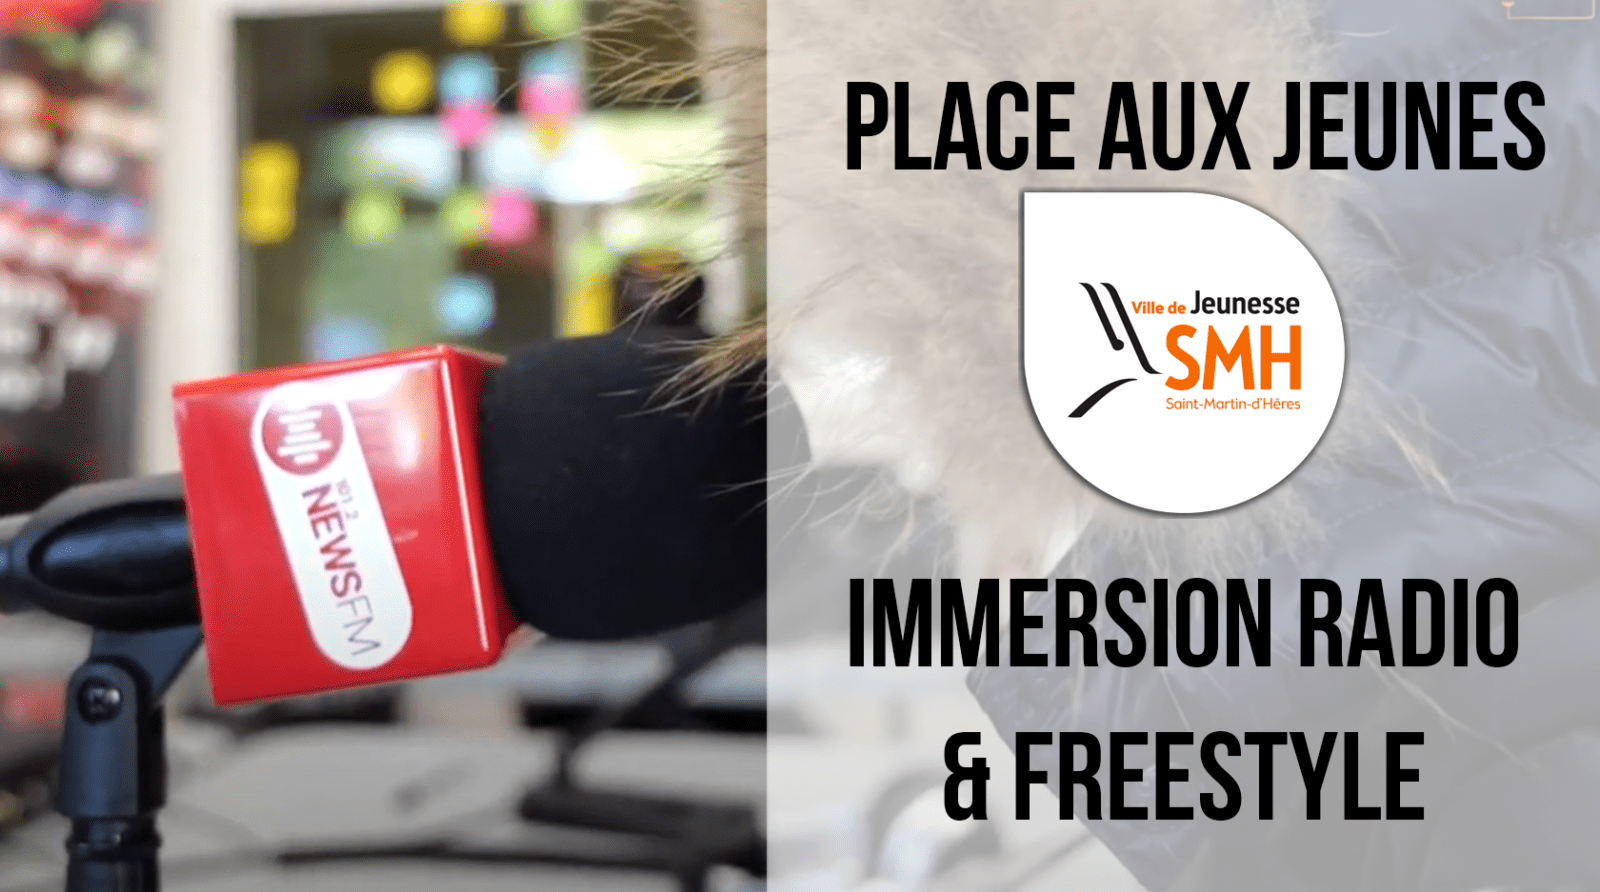 SMH Immersion radio Freestyle Place aux jeunes Studio Box Projets